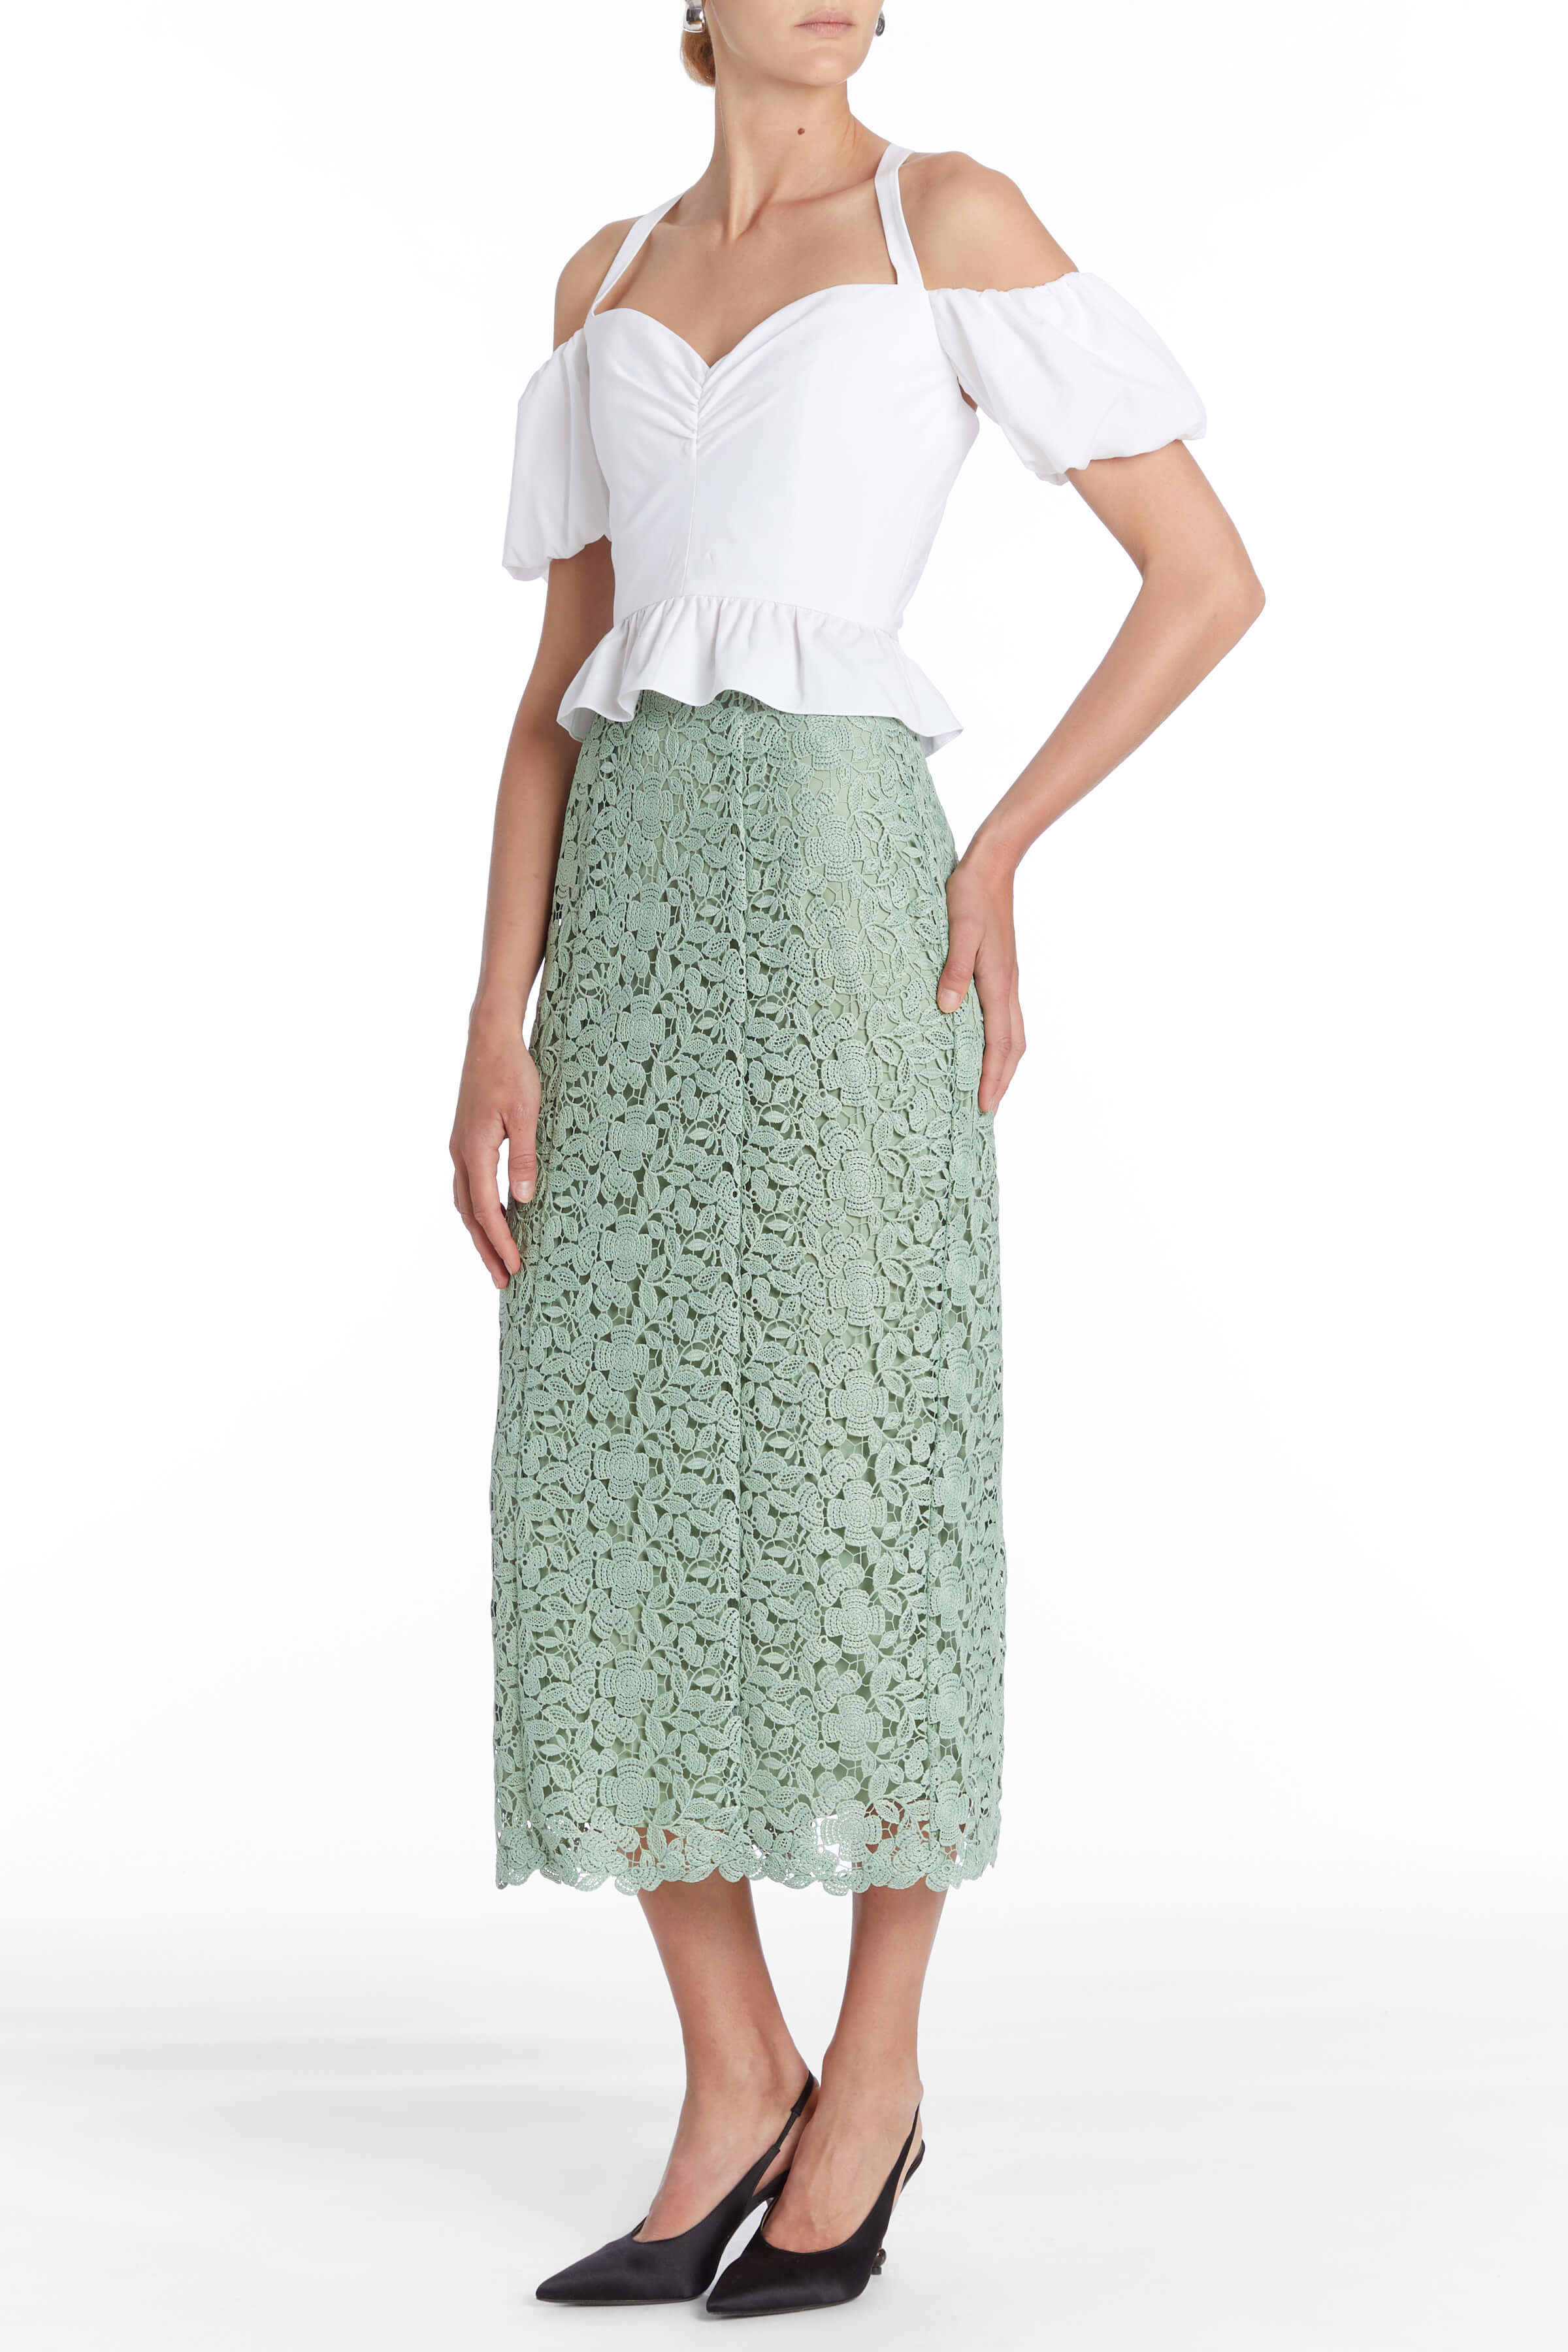 Tammy Green Crochet Lace Skirt